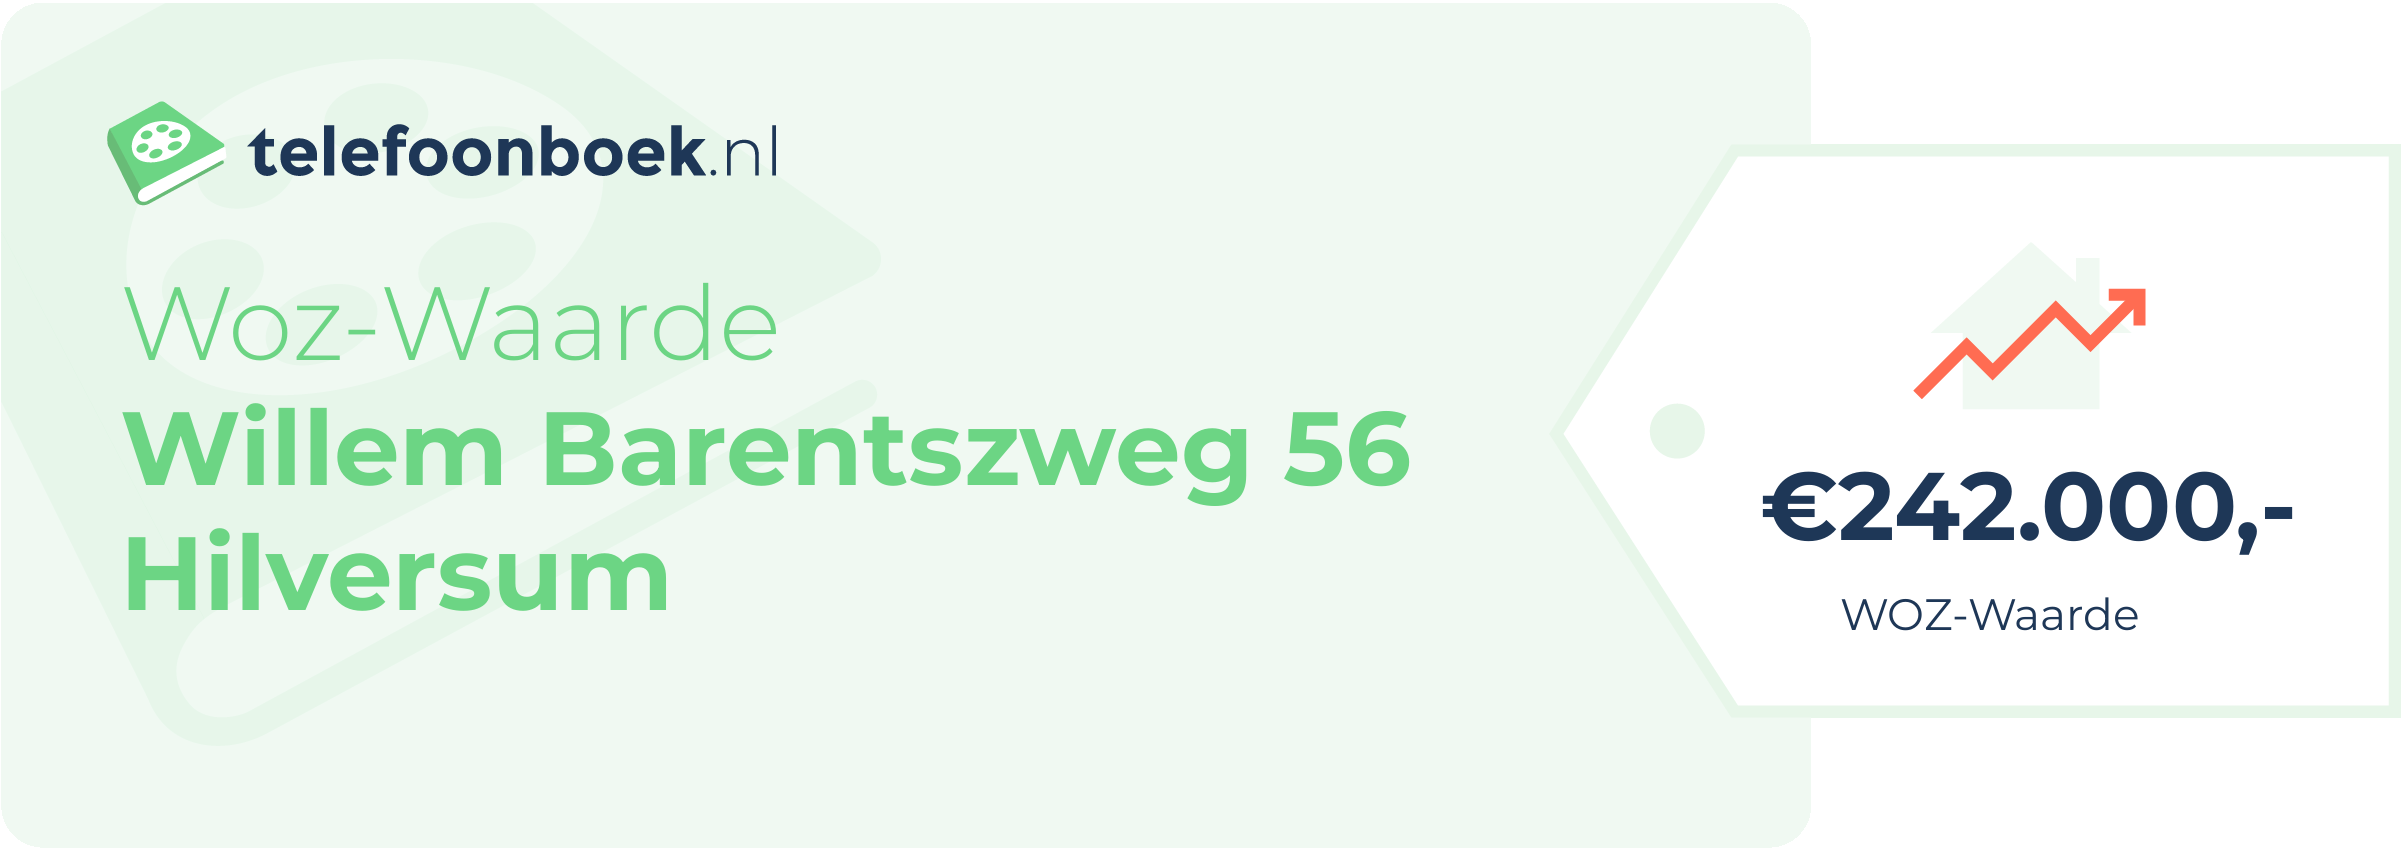 WOZ-waarde Willem Barentszweg 56 Hilversum